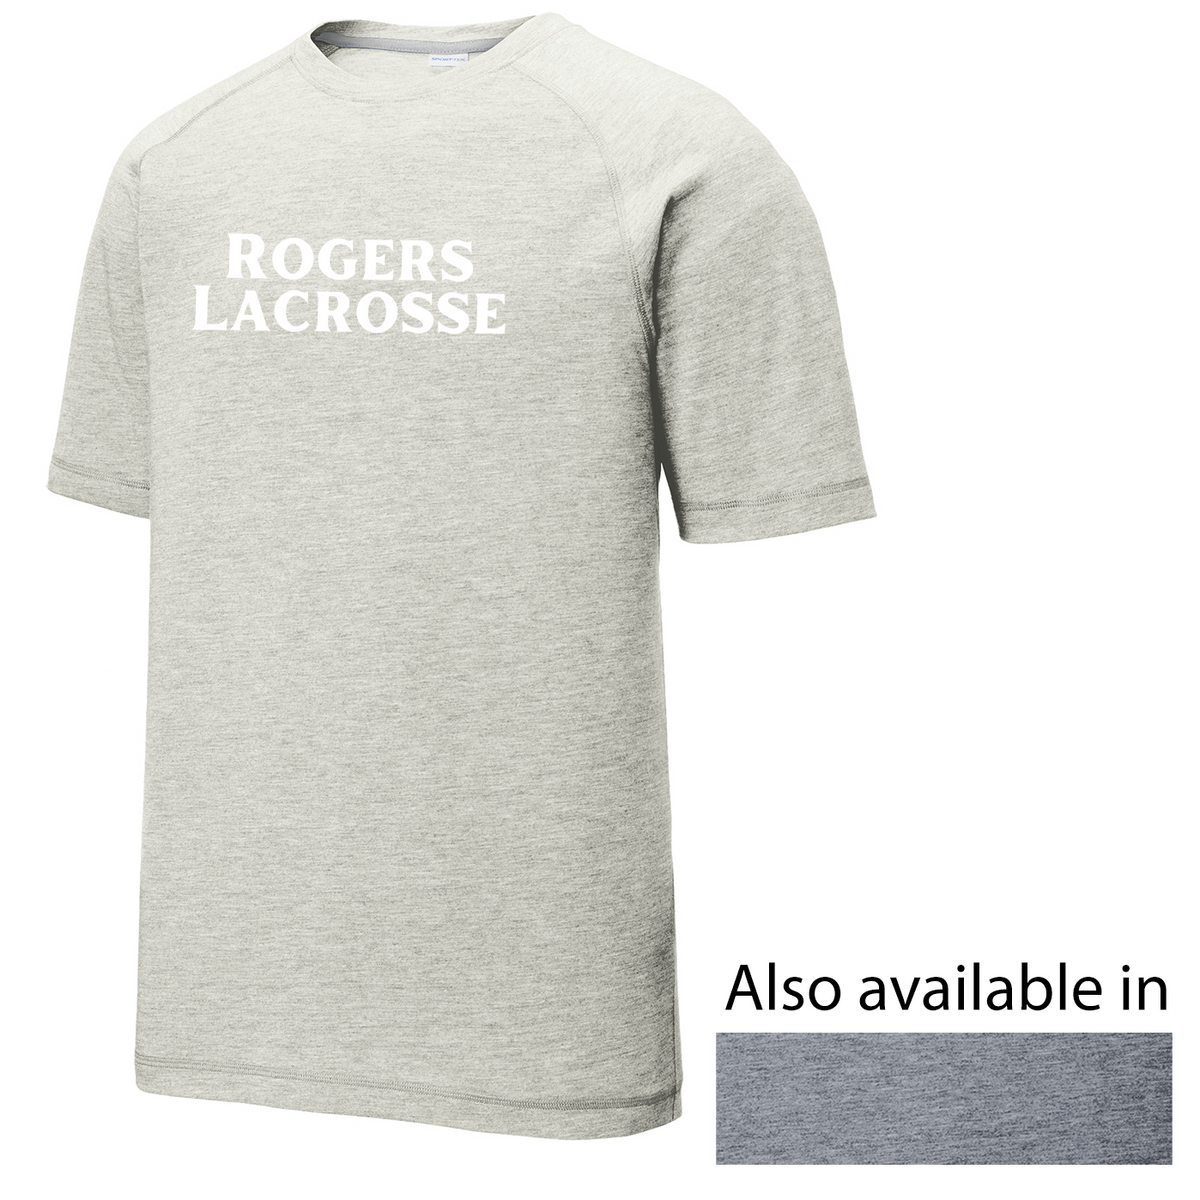 Rogers Lacrosse Raglan CottonTouch Tee